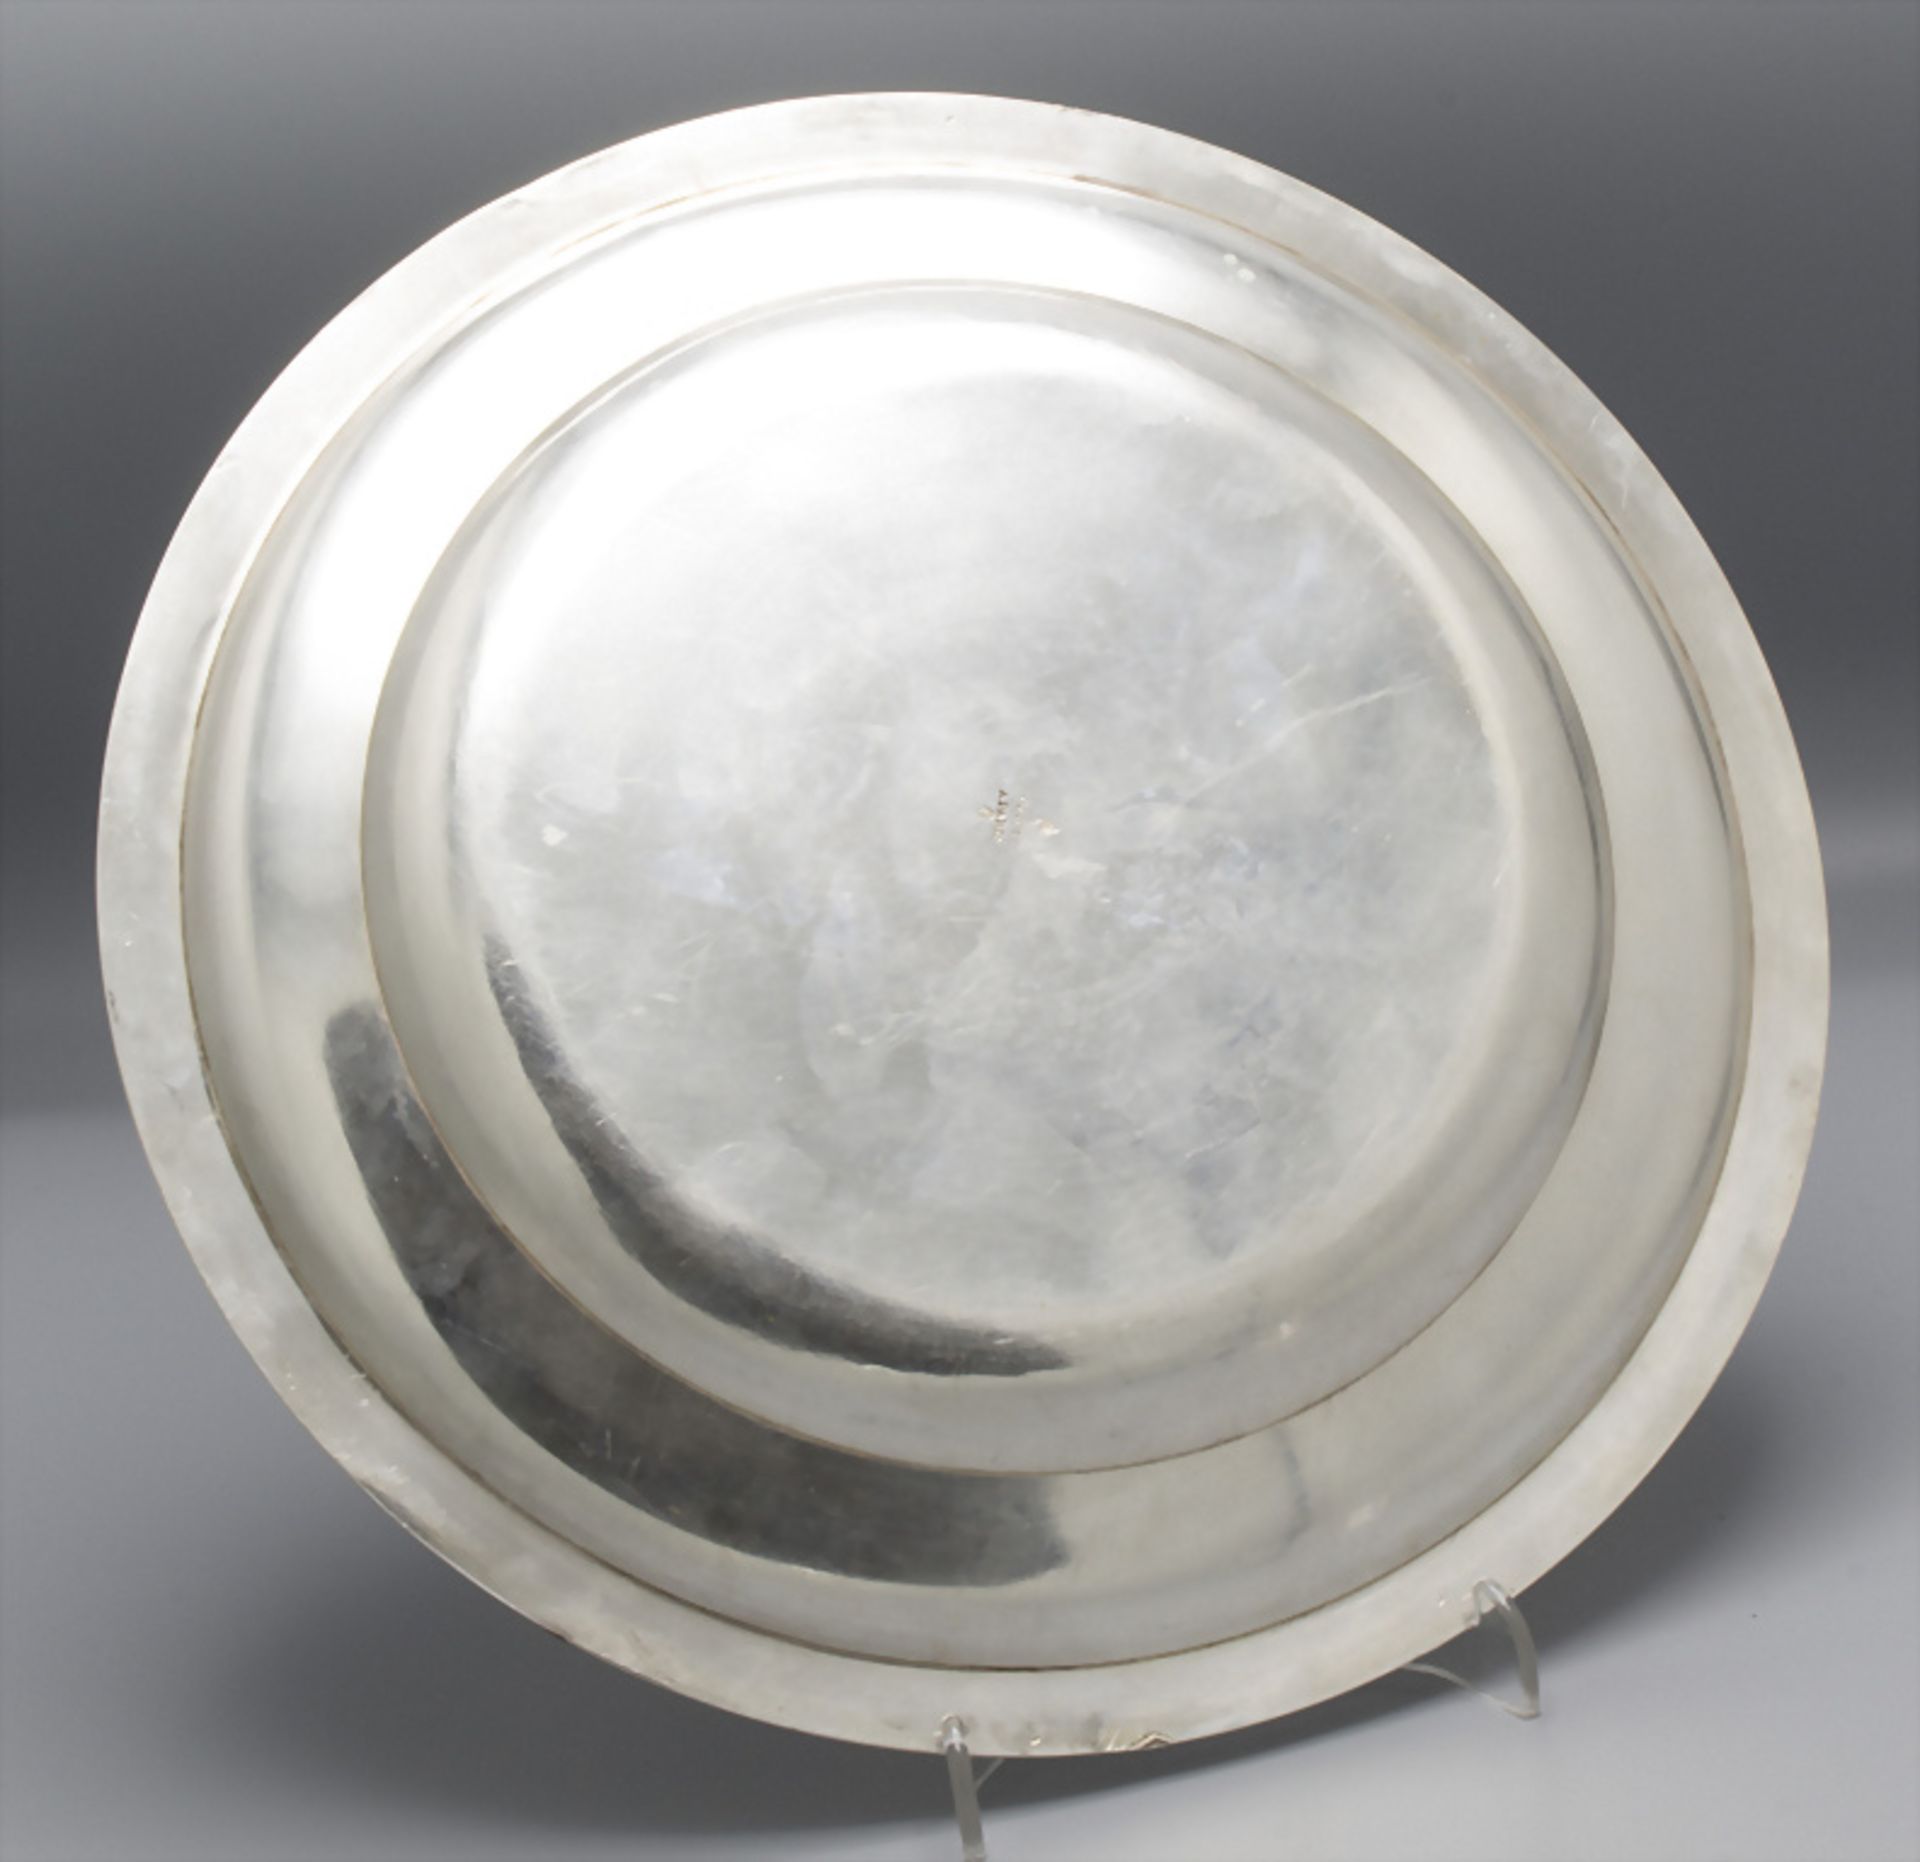 12 Silberteller / 12 assiettes en argent massif / A set of 12 silver plates, Odiot, Paris, um 1870 - Image 19 of 29